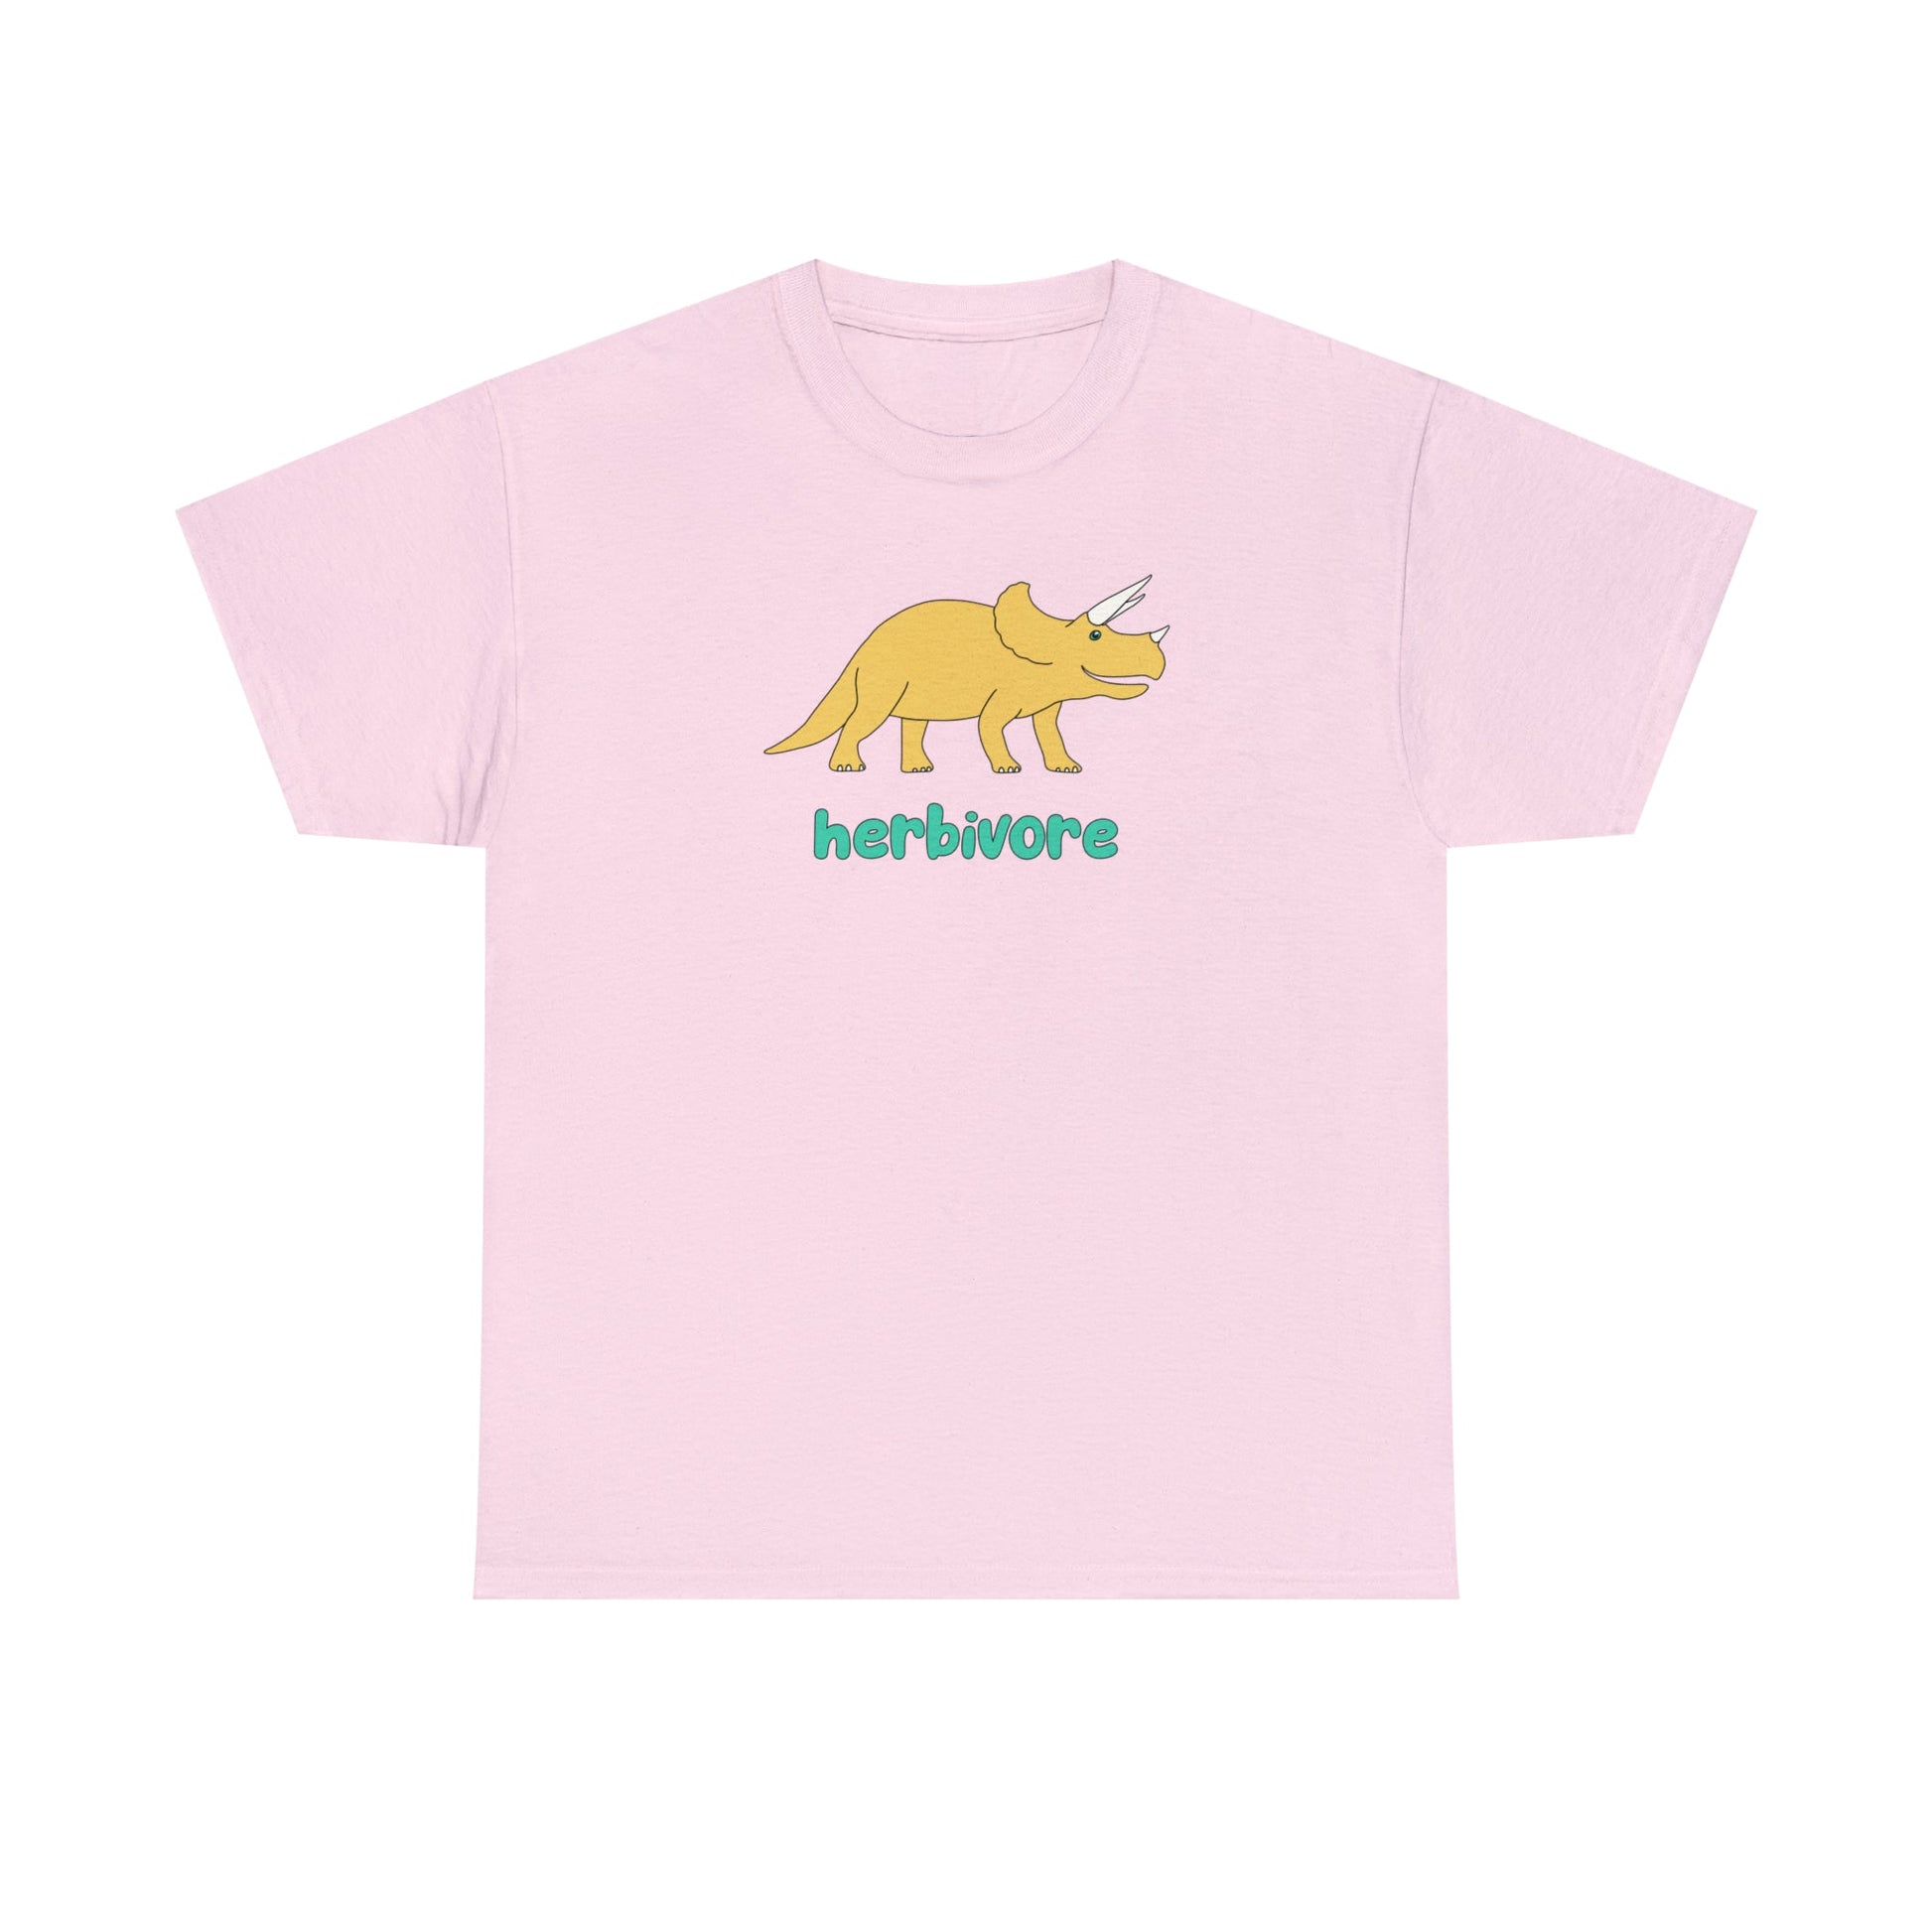 Herbivore | T-shirt - Detezi Designs-16725078238080966952